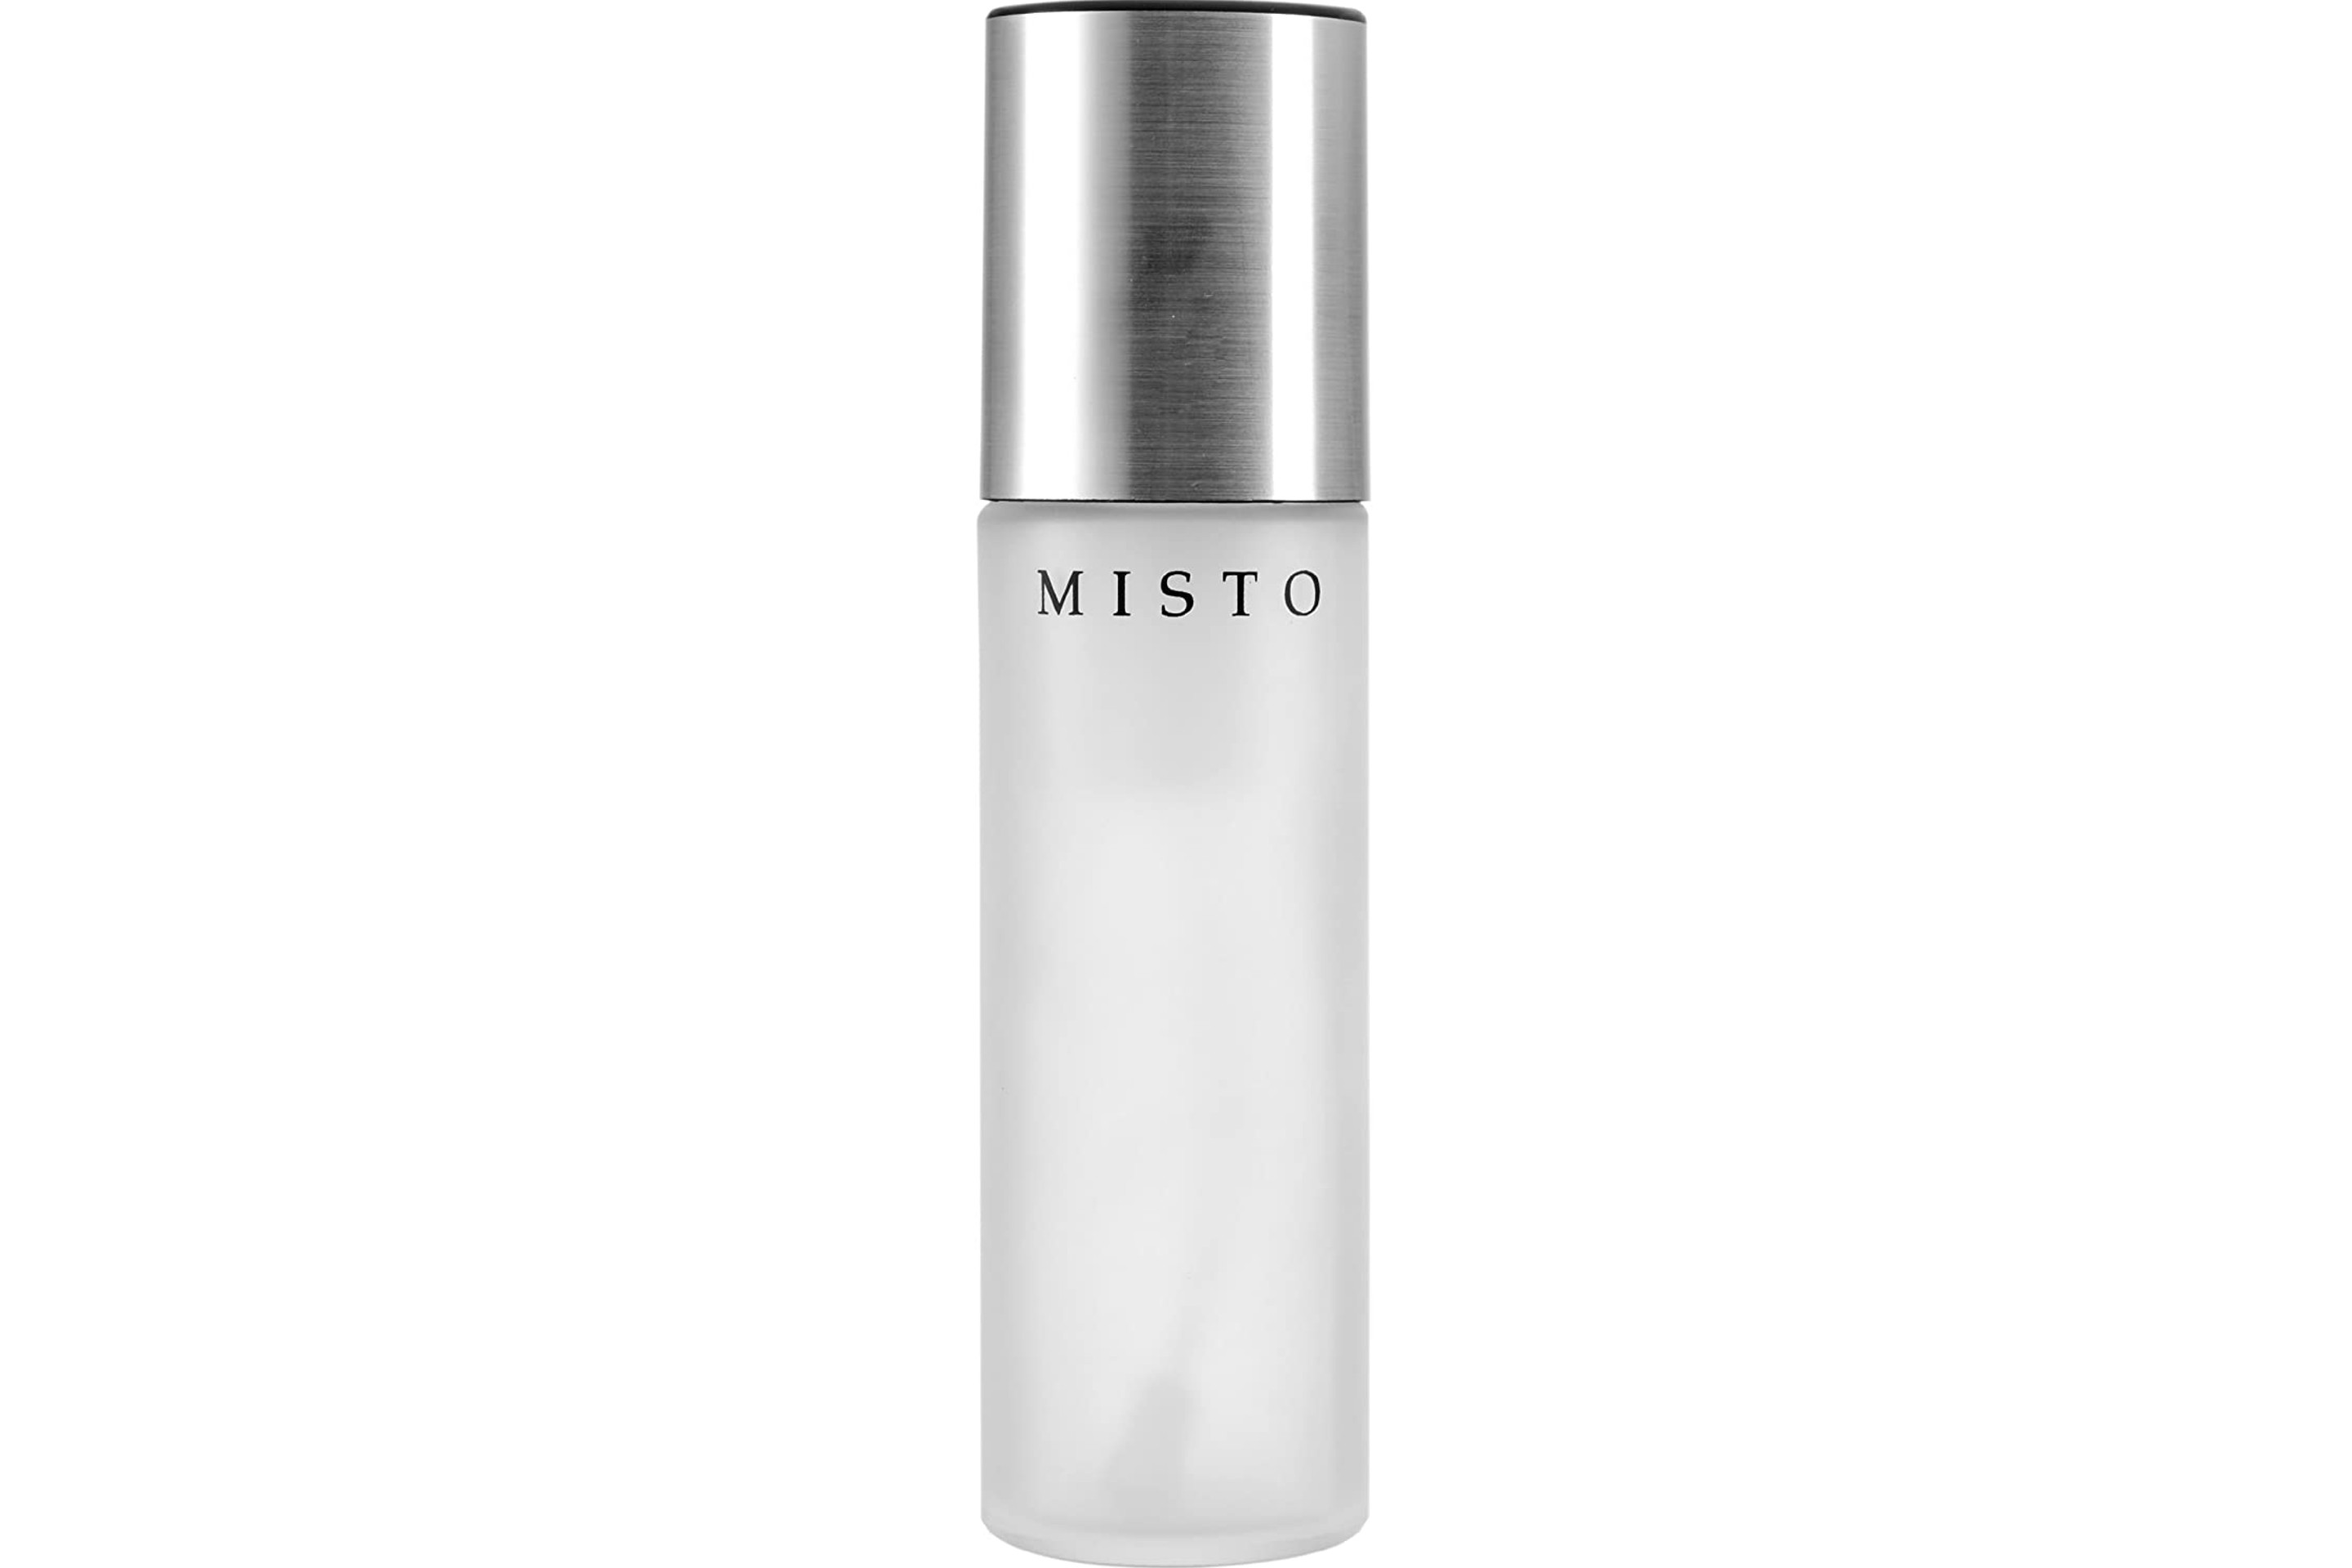 Misto Frosted Glass Oil Sprayer